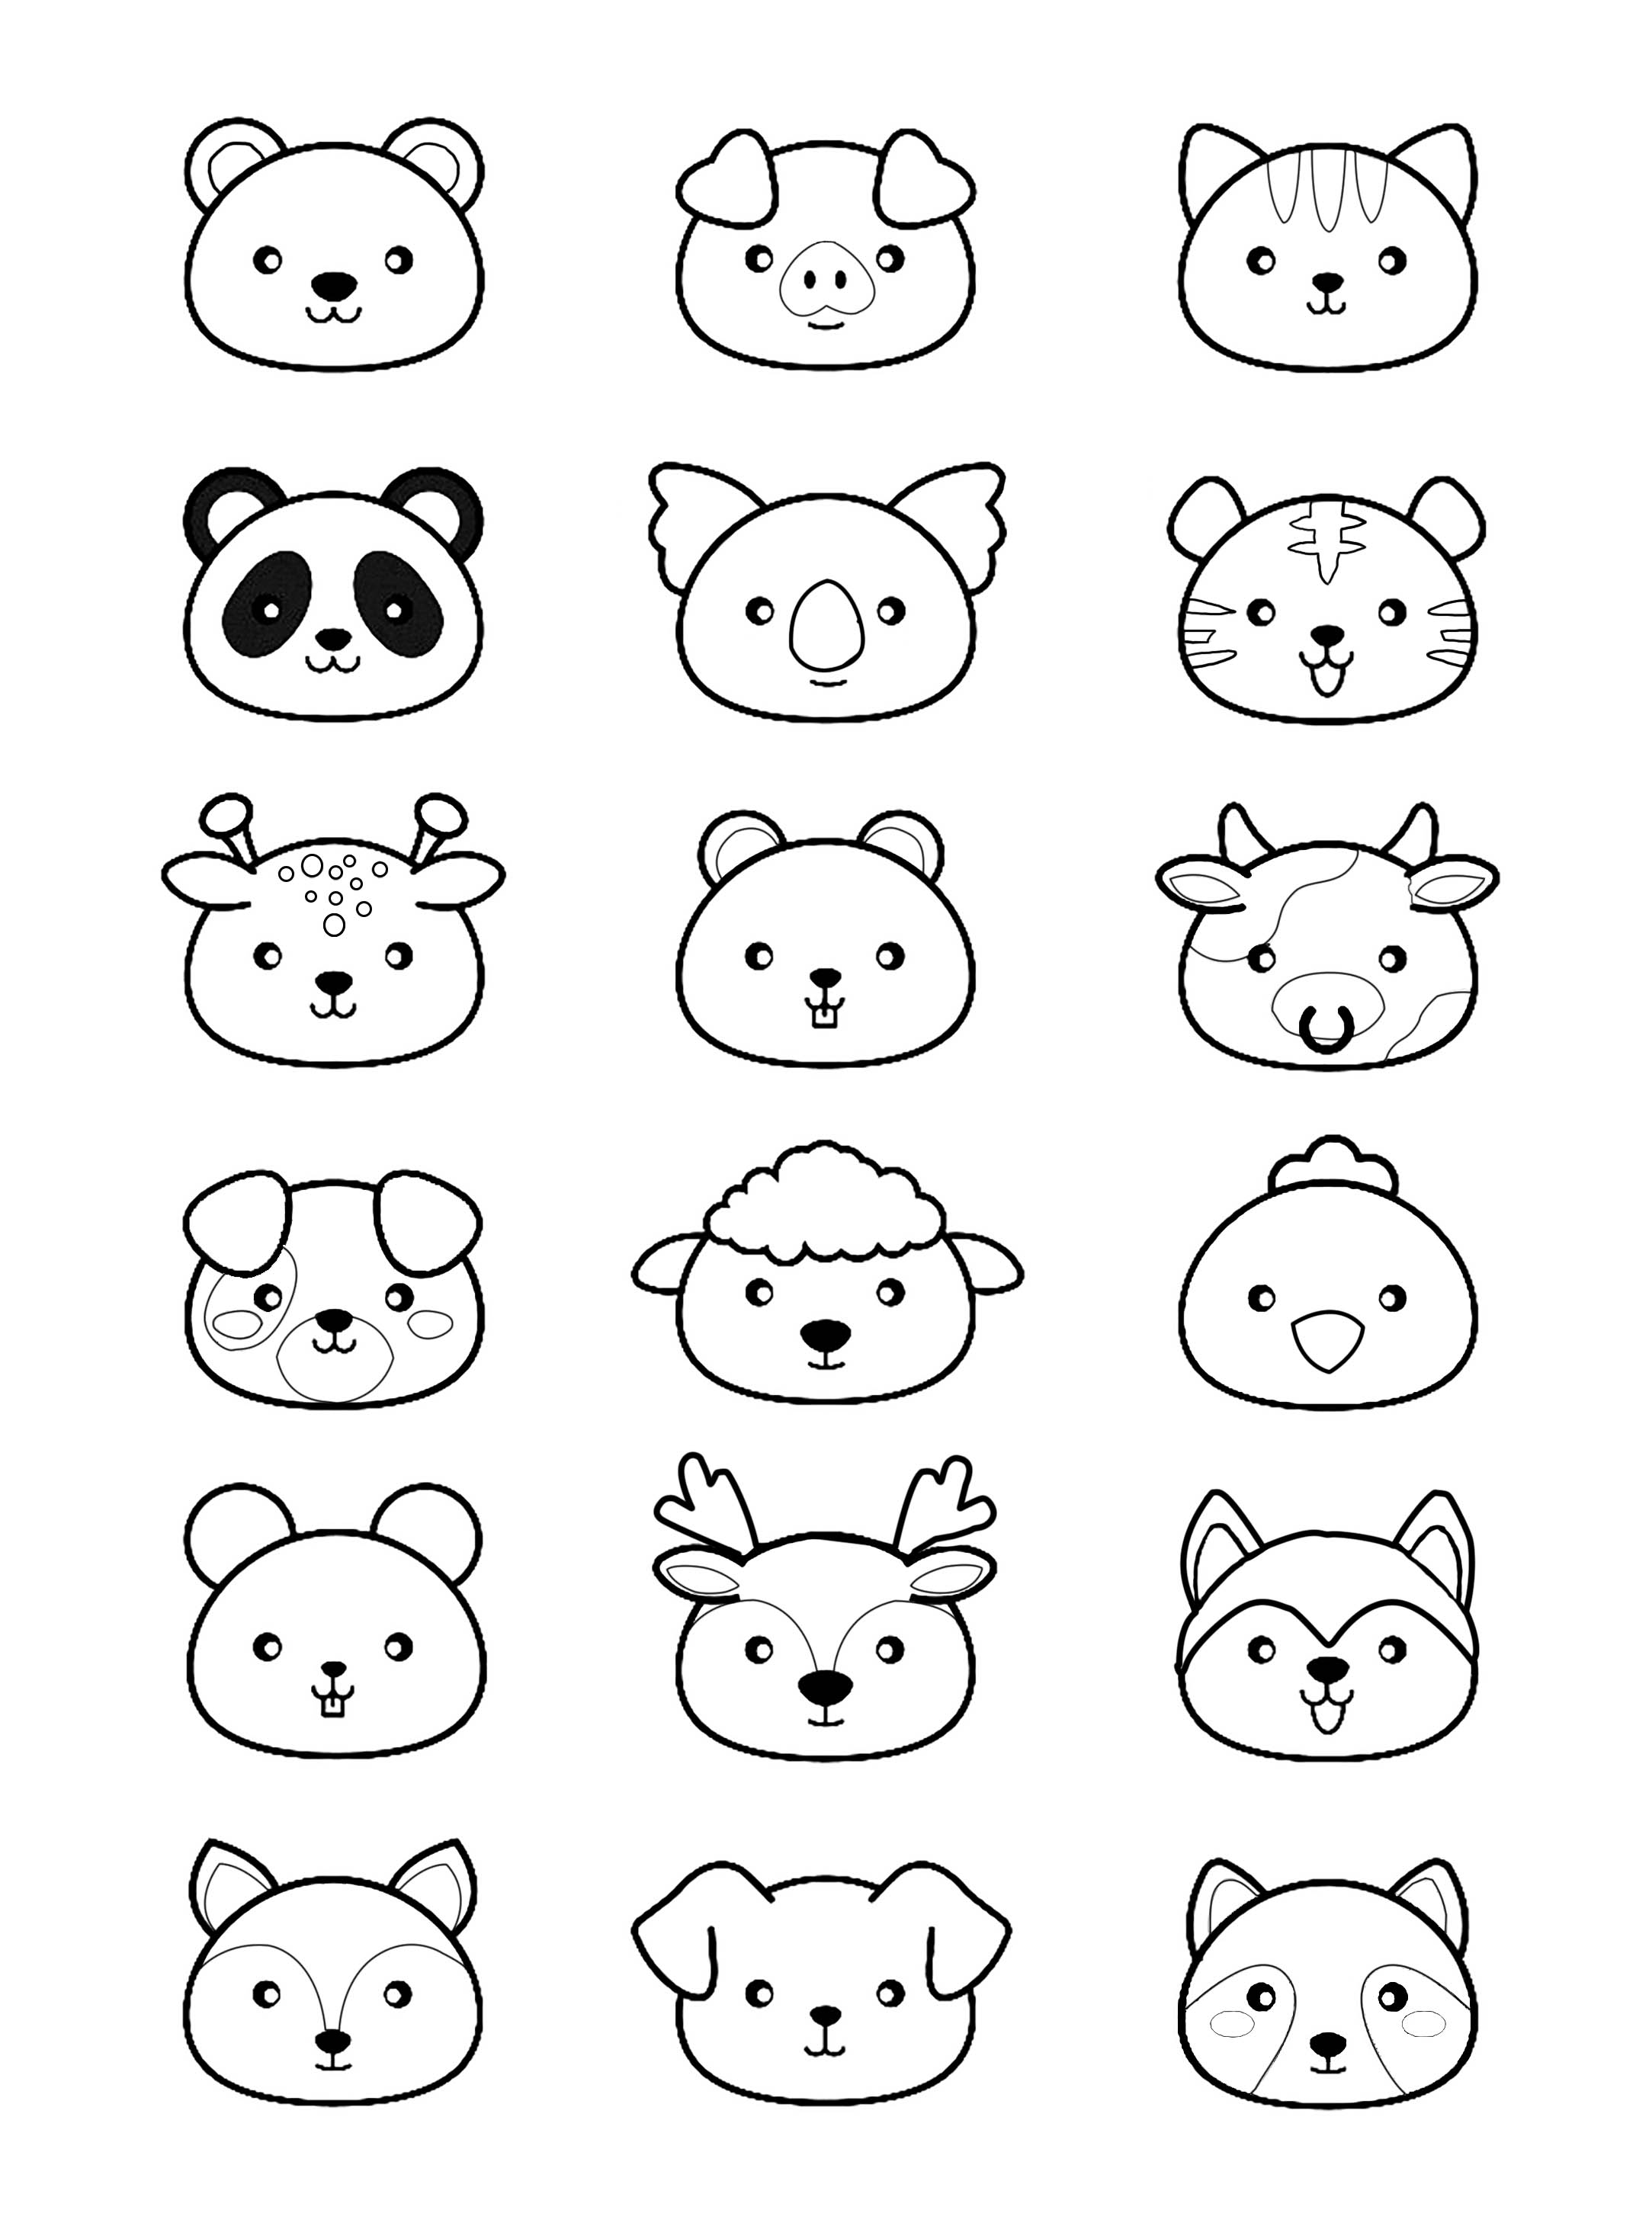 Kawaii animals - Panda Adult Coloring Pages